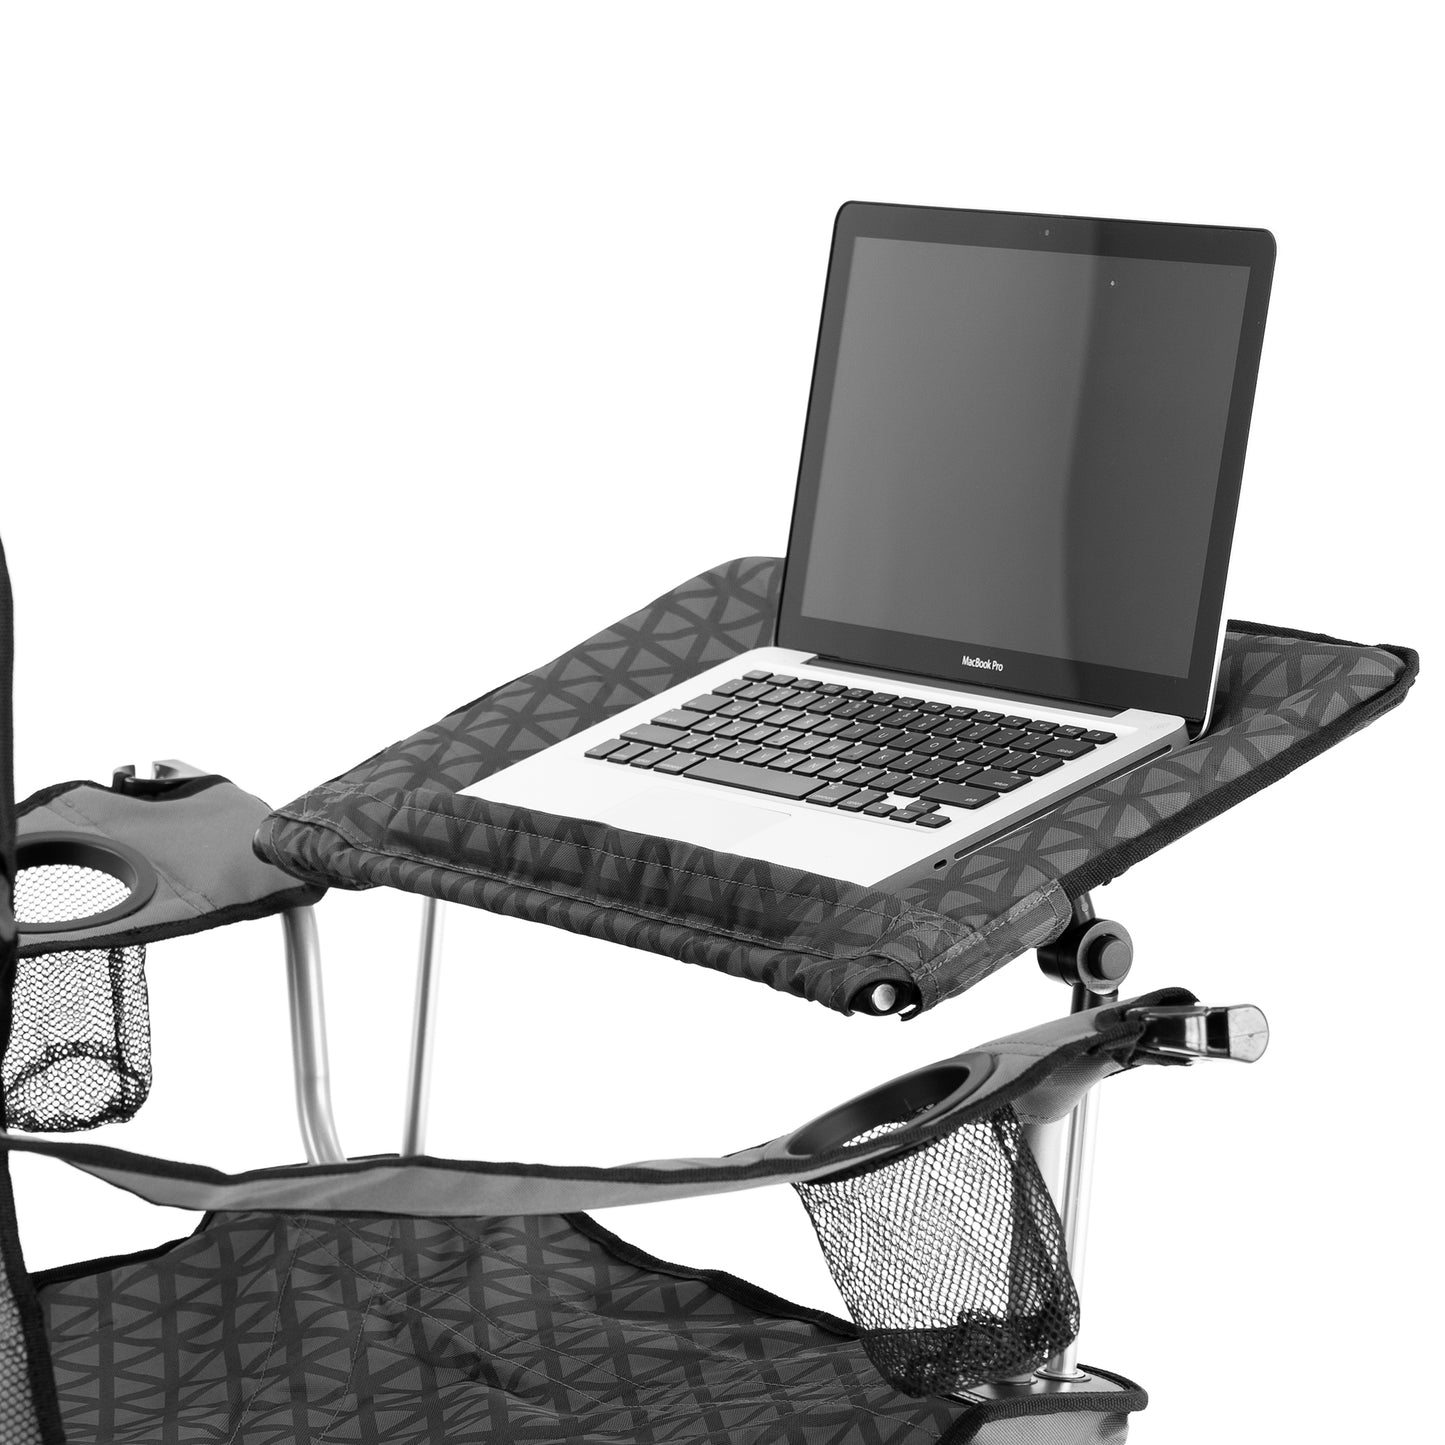 iChair Folding Wine Chair with Adjustable Table | Earth Diamond - Custom Folding Wagons